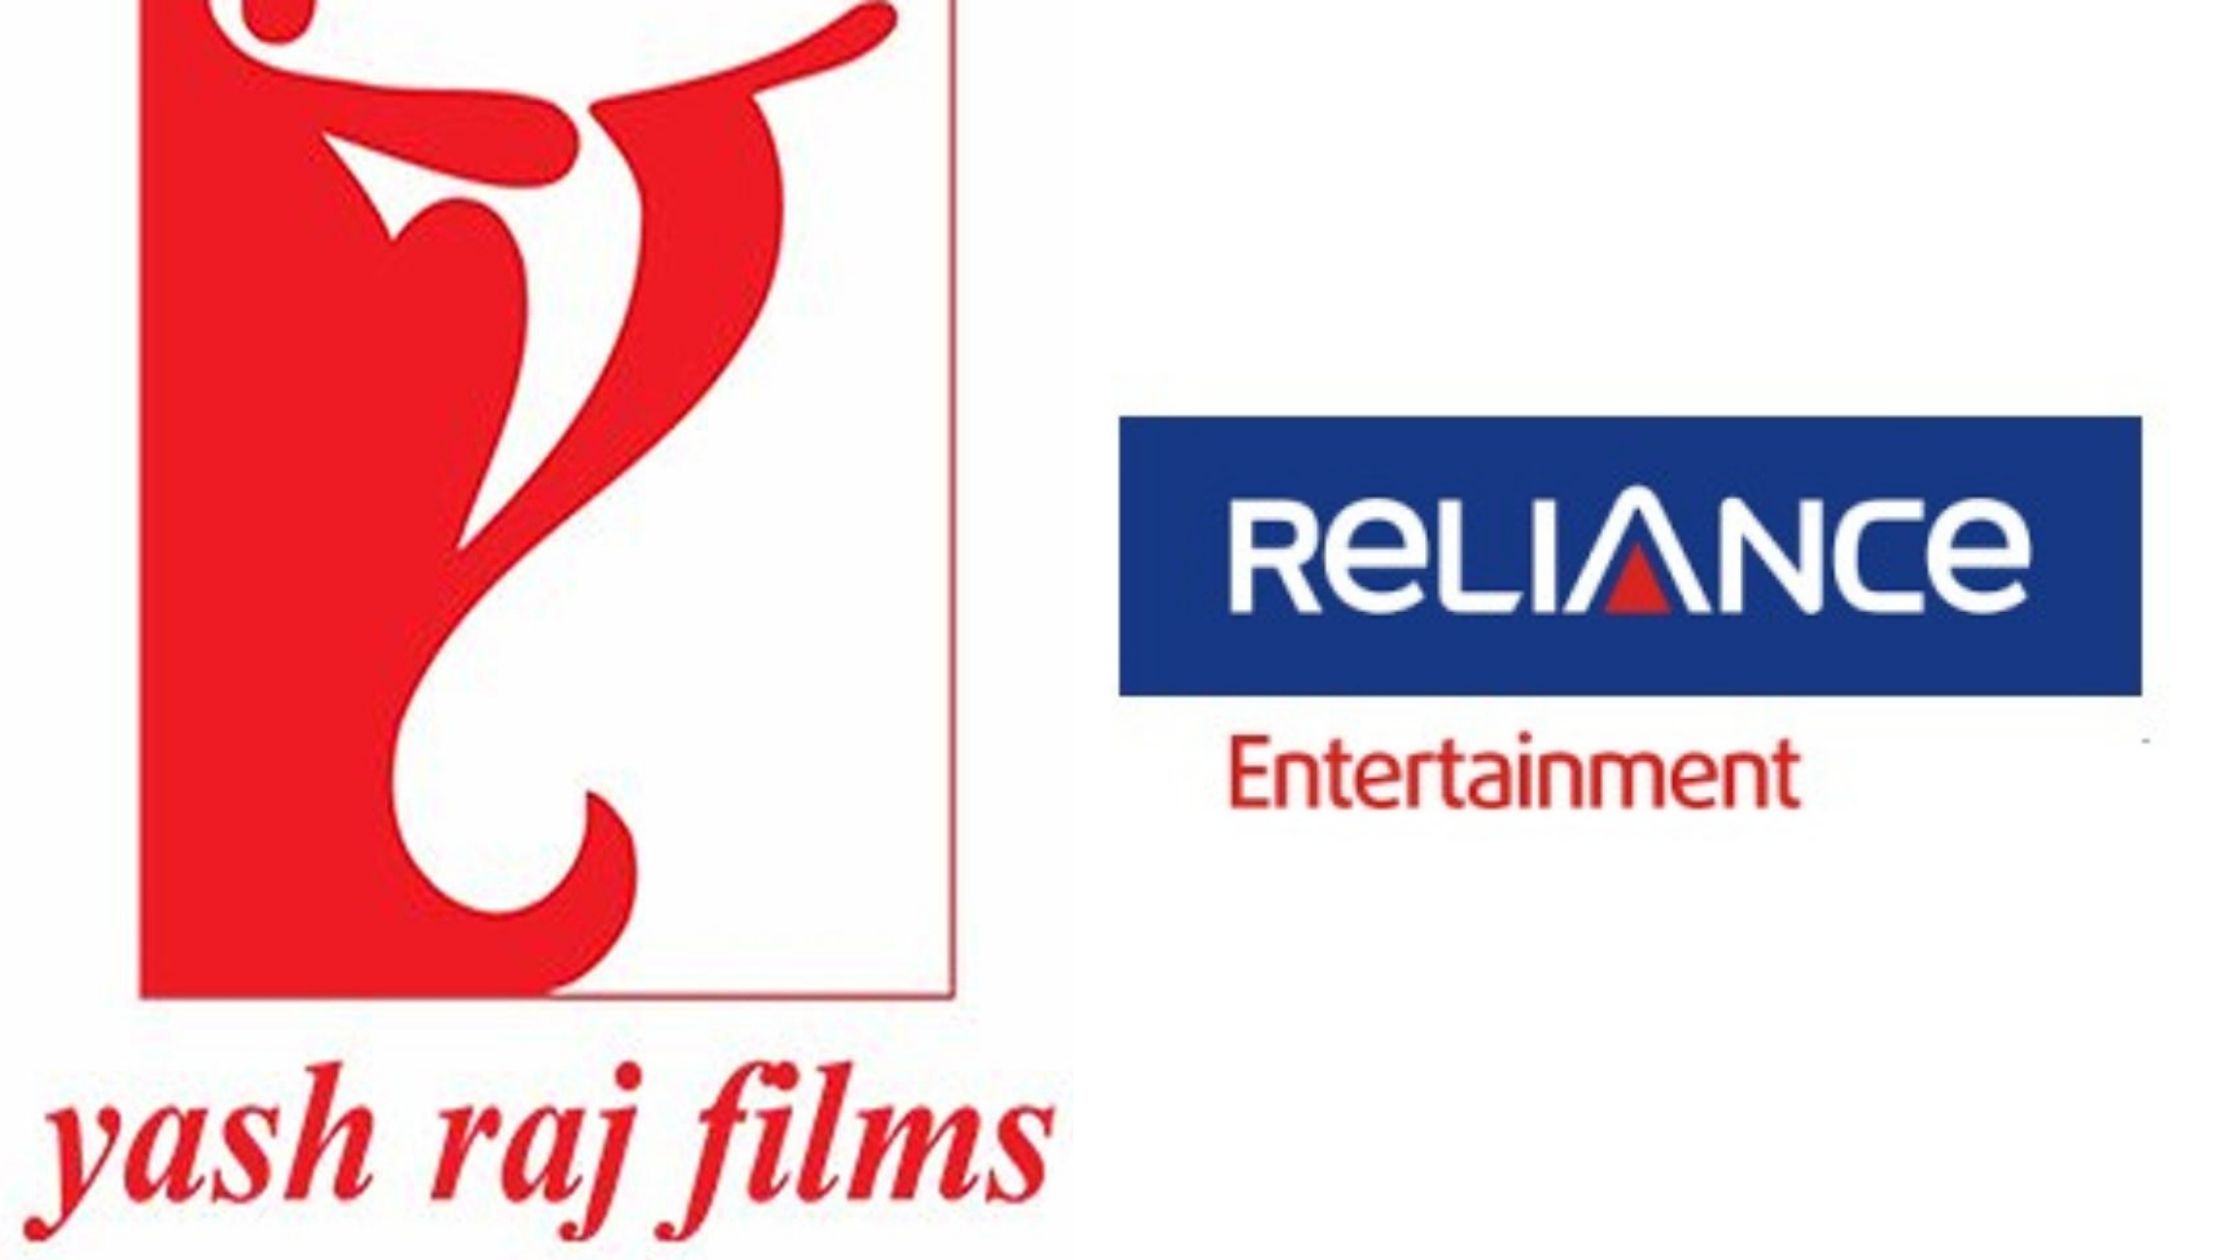 Yash raj films and Reliance entertainment